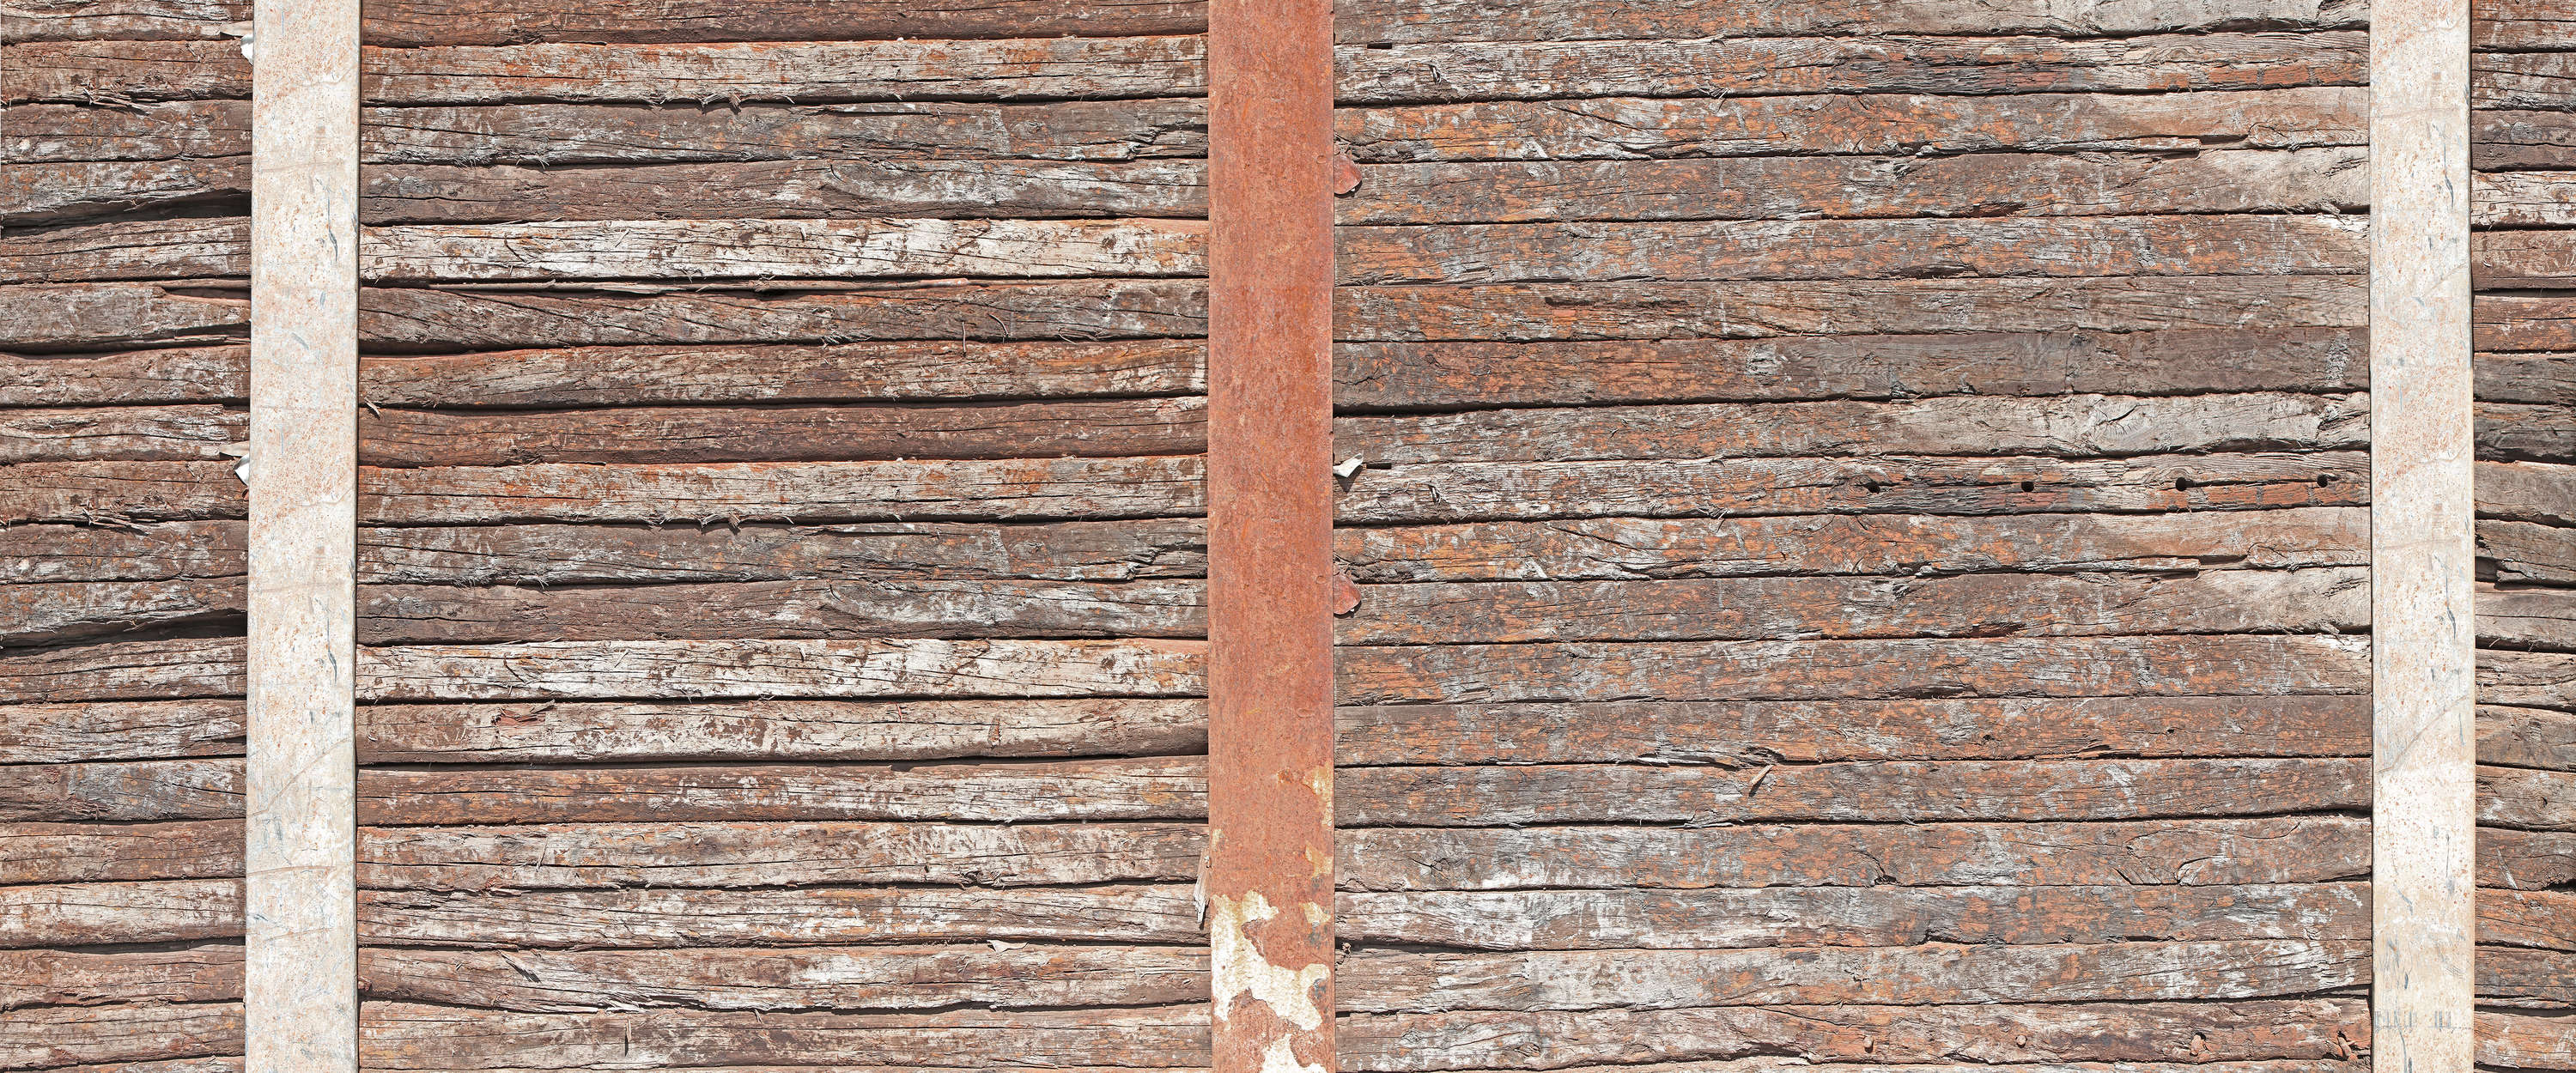             Photo wallpaper old wooden wall between rusty steel beams
        